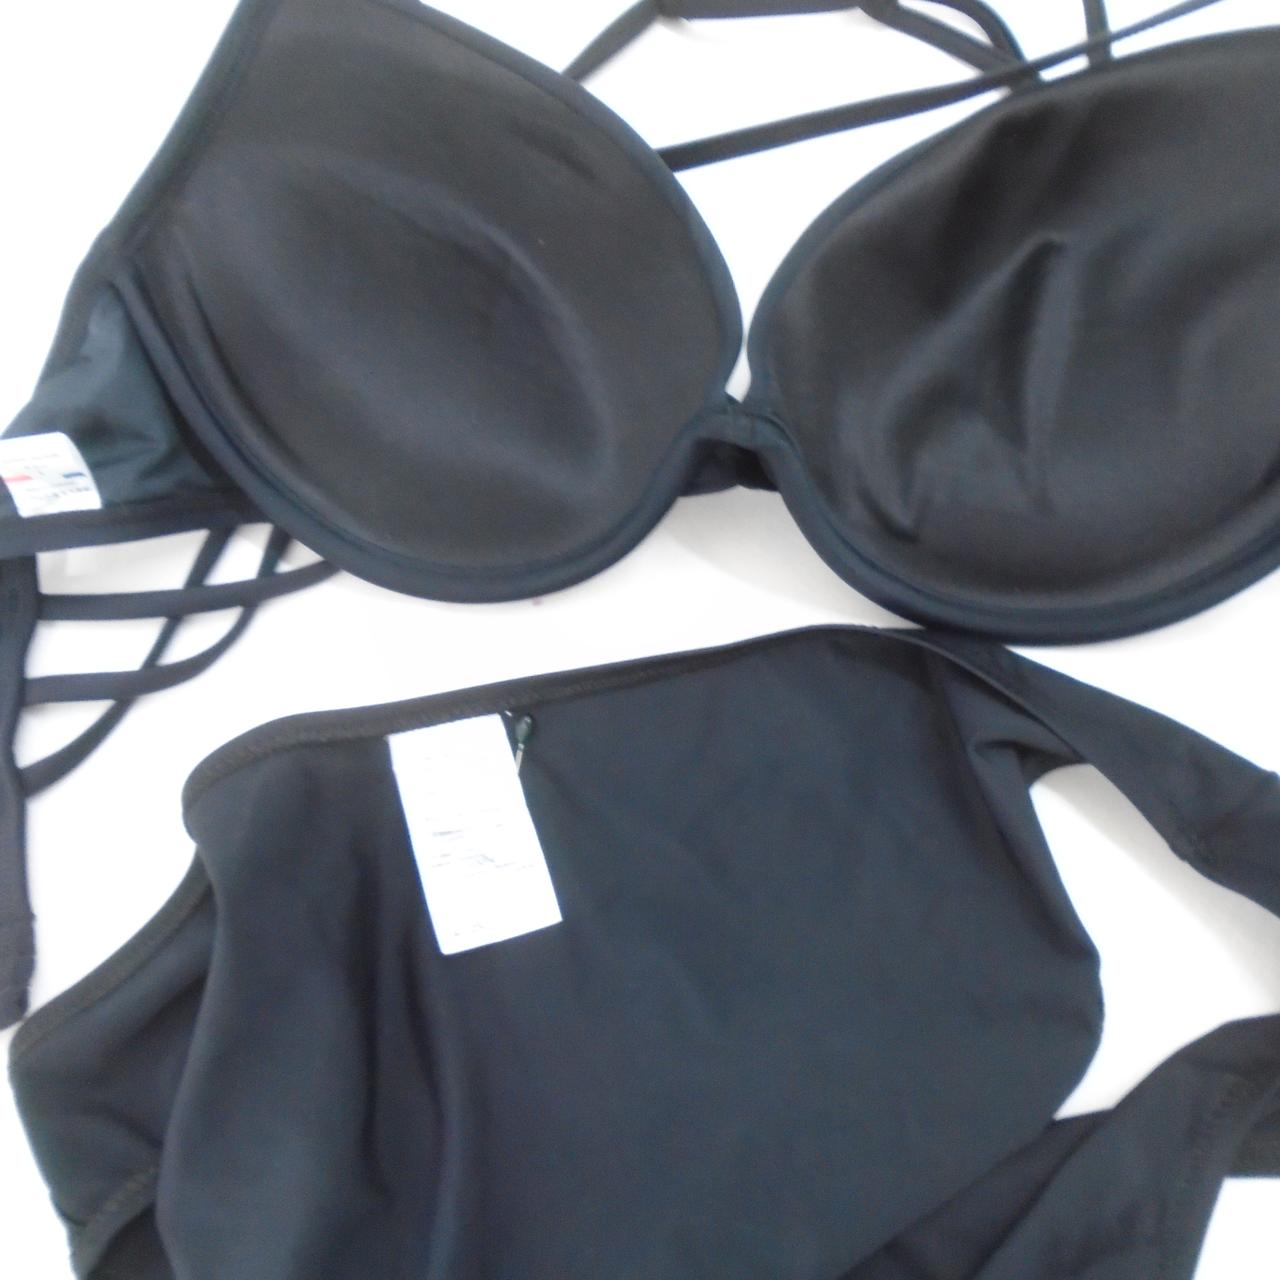 Women's Swimsuit Relleciga. Black. L. Used. Good